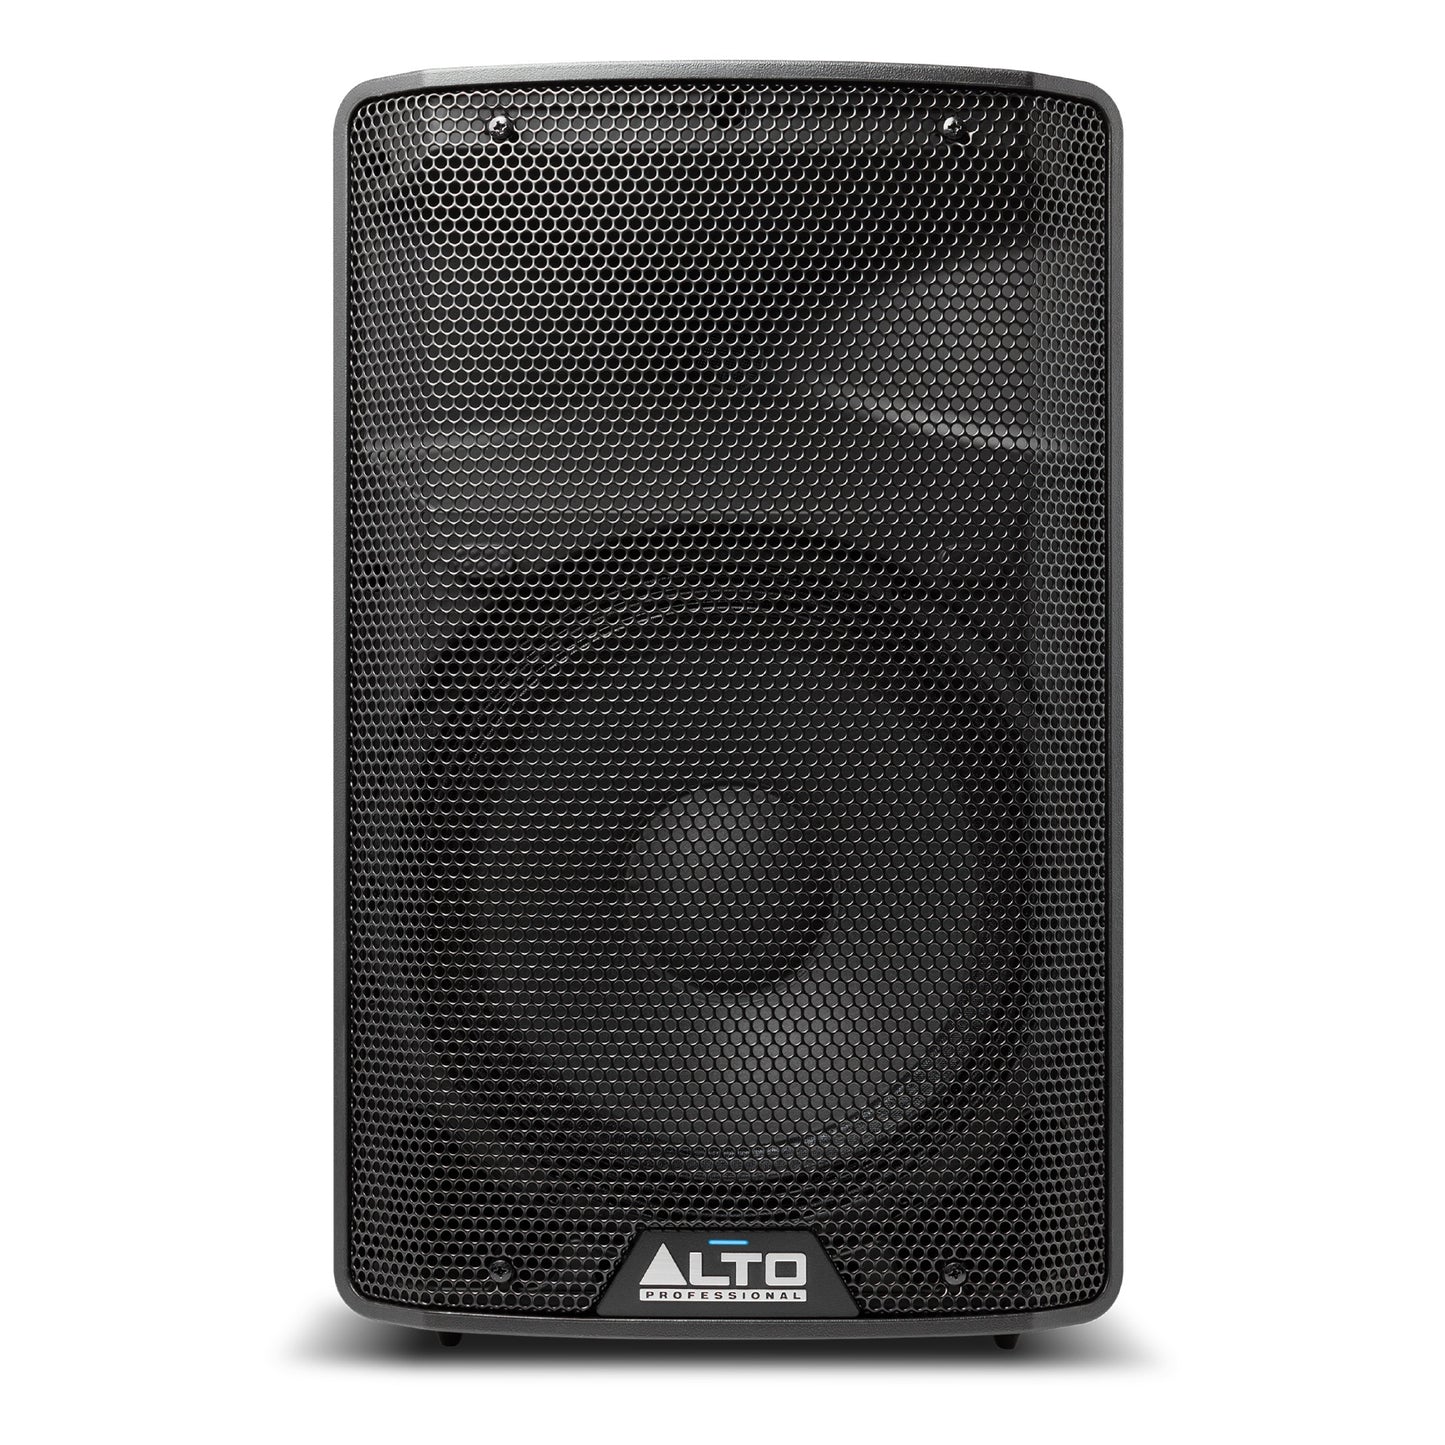 Alto Professional TX310 - 350-Watt 10-Inch 2-Way Powered Loudspeaker